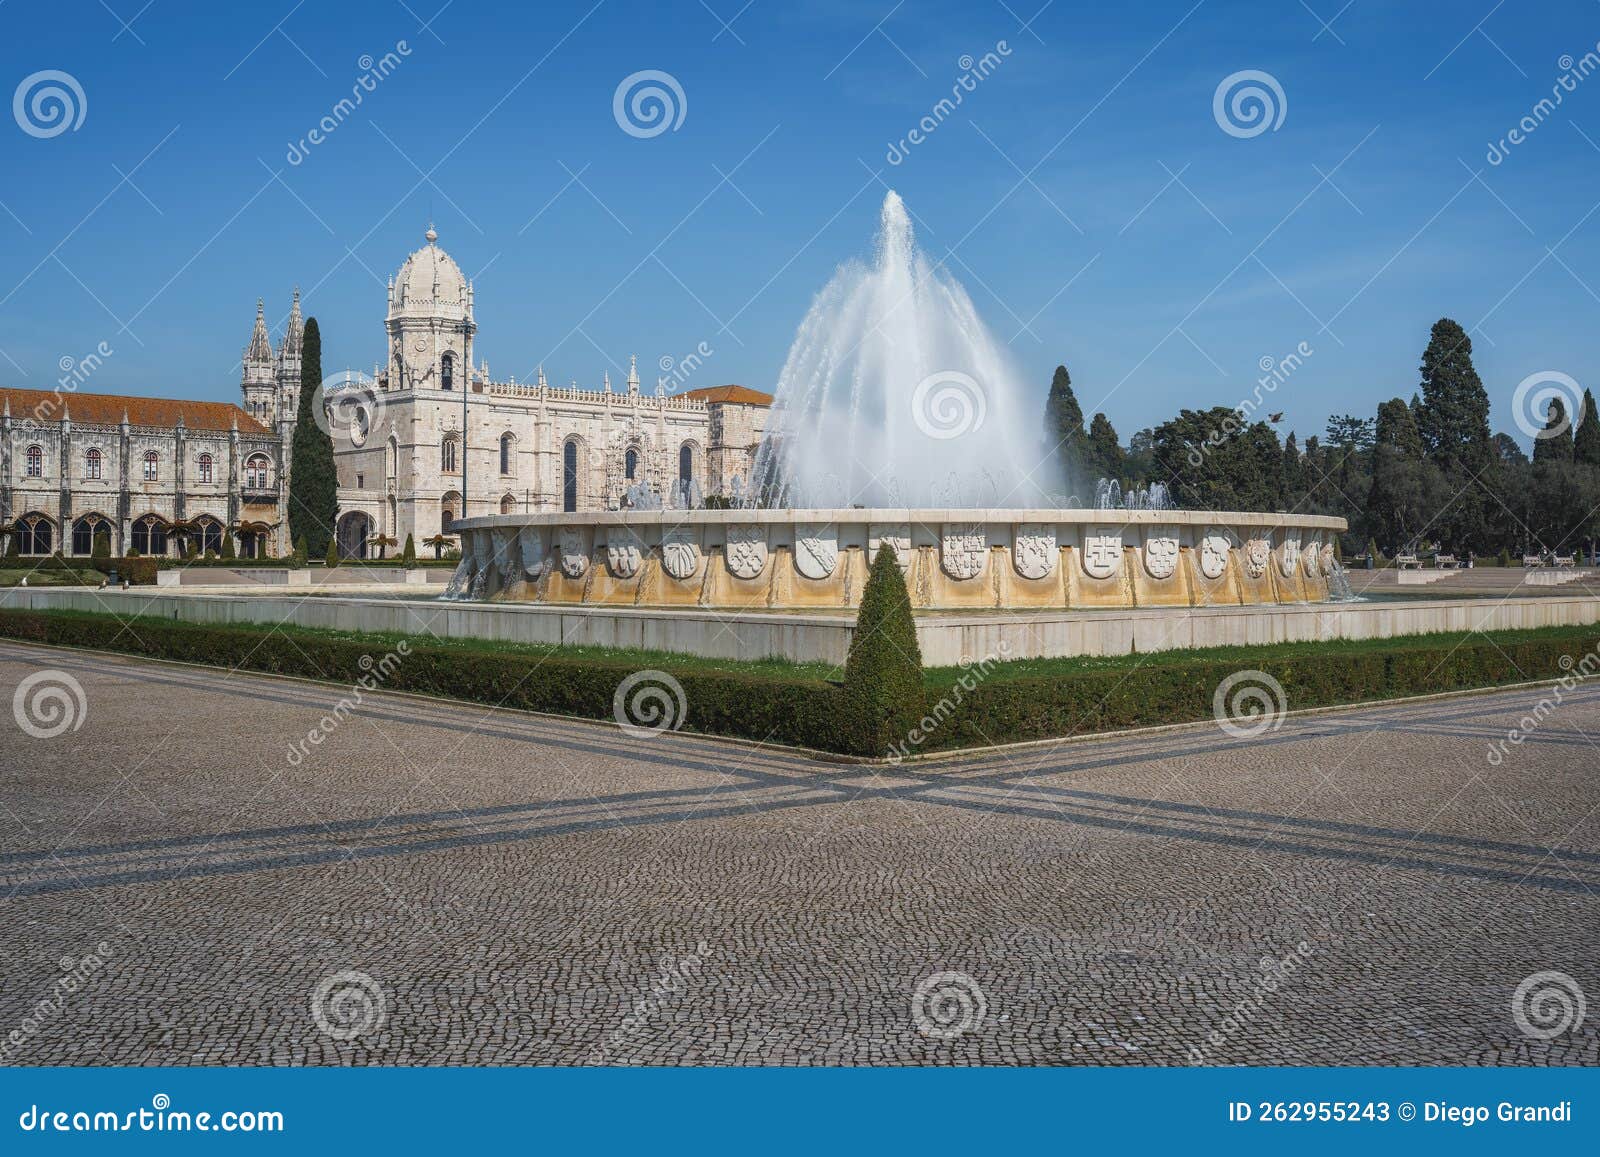 fountain at jardim da praca do imperio square with jeronimos monastery - lisbon, portugal